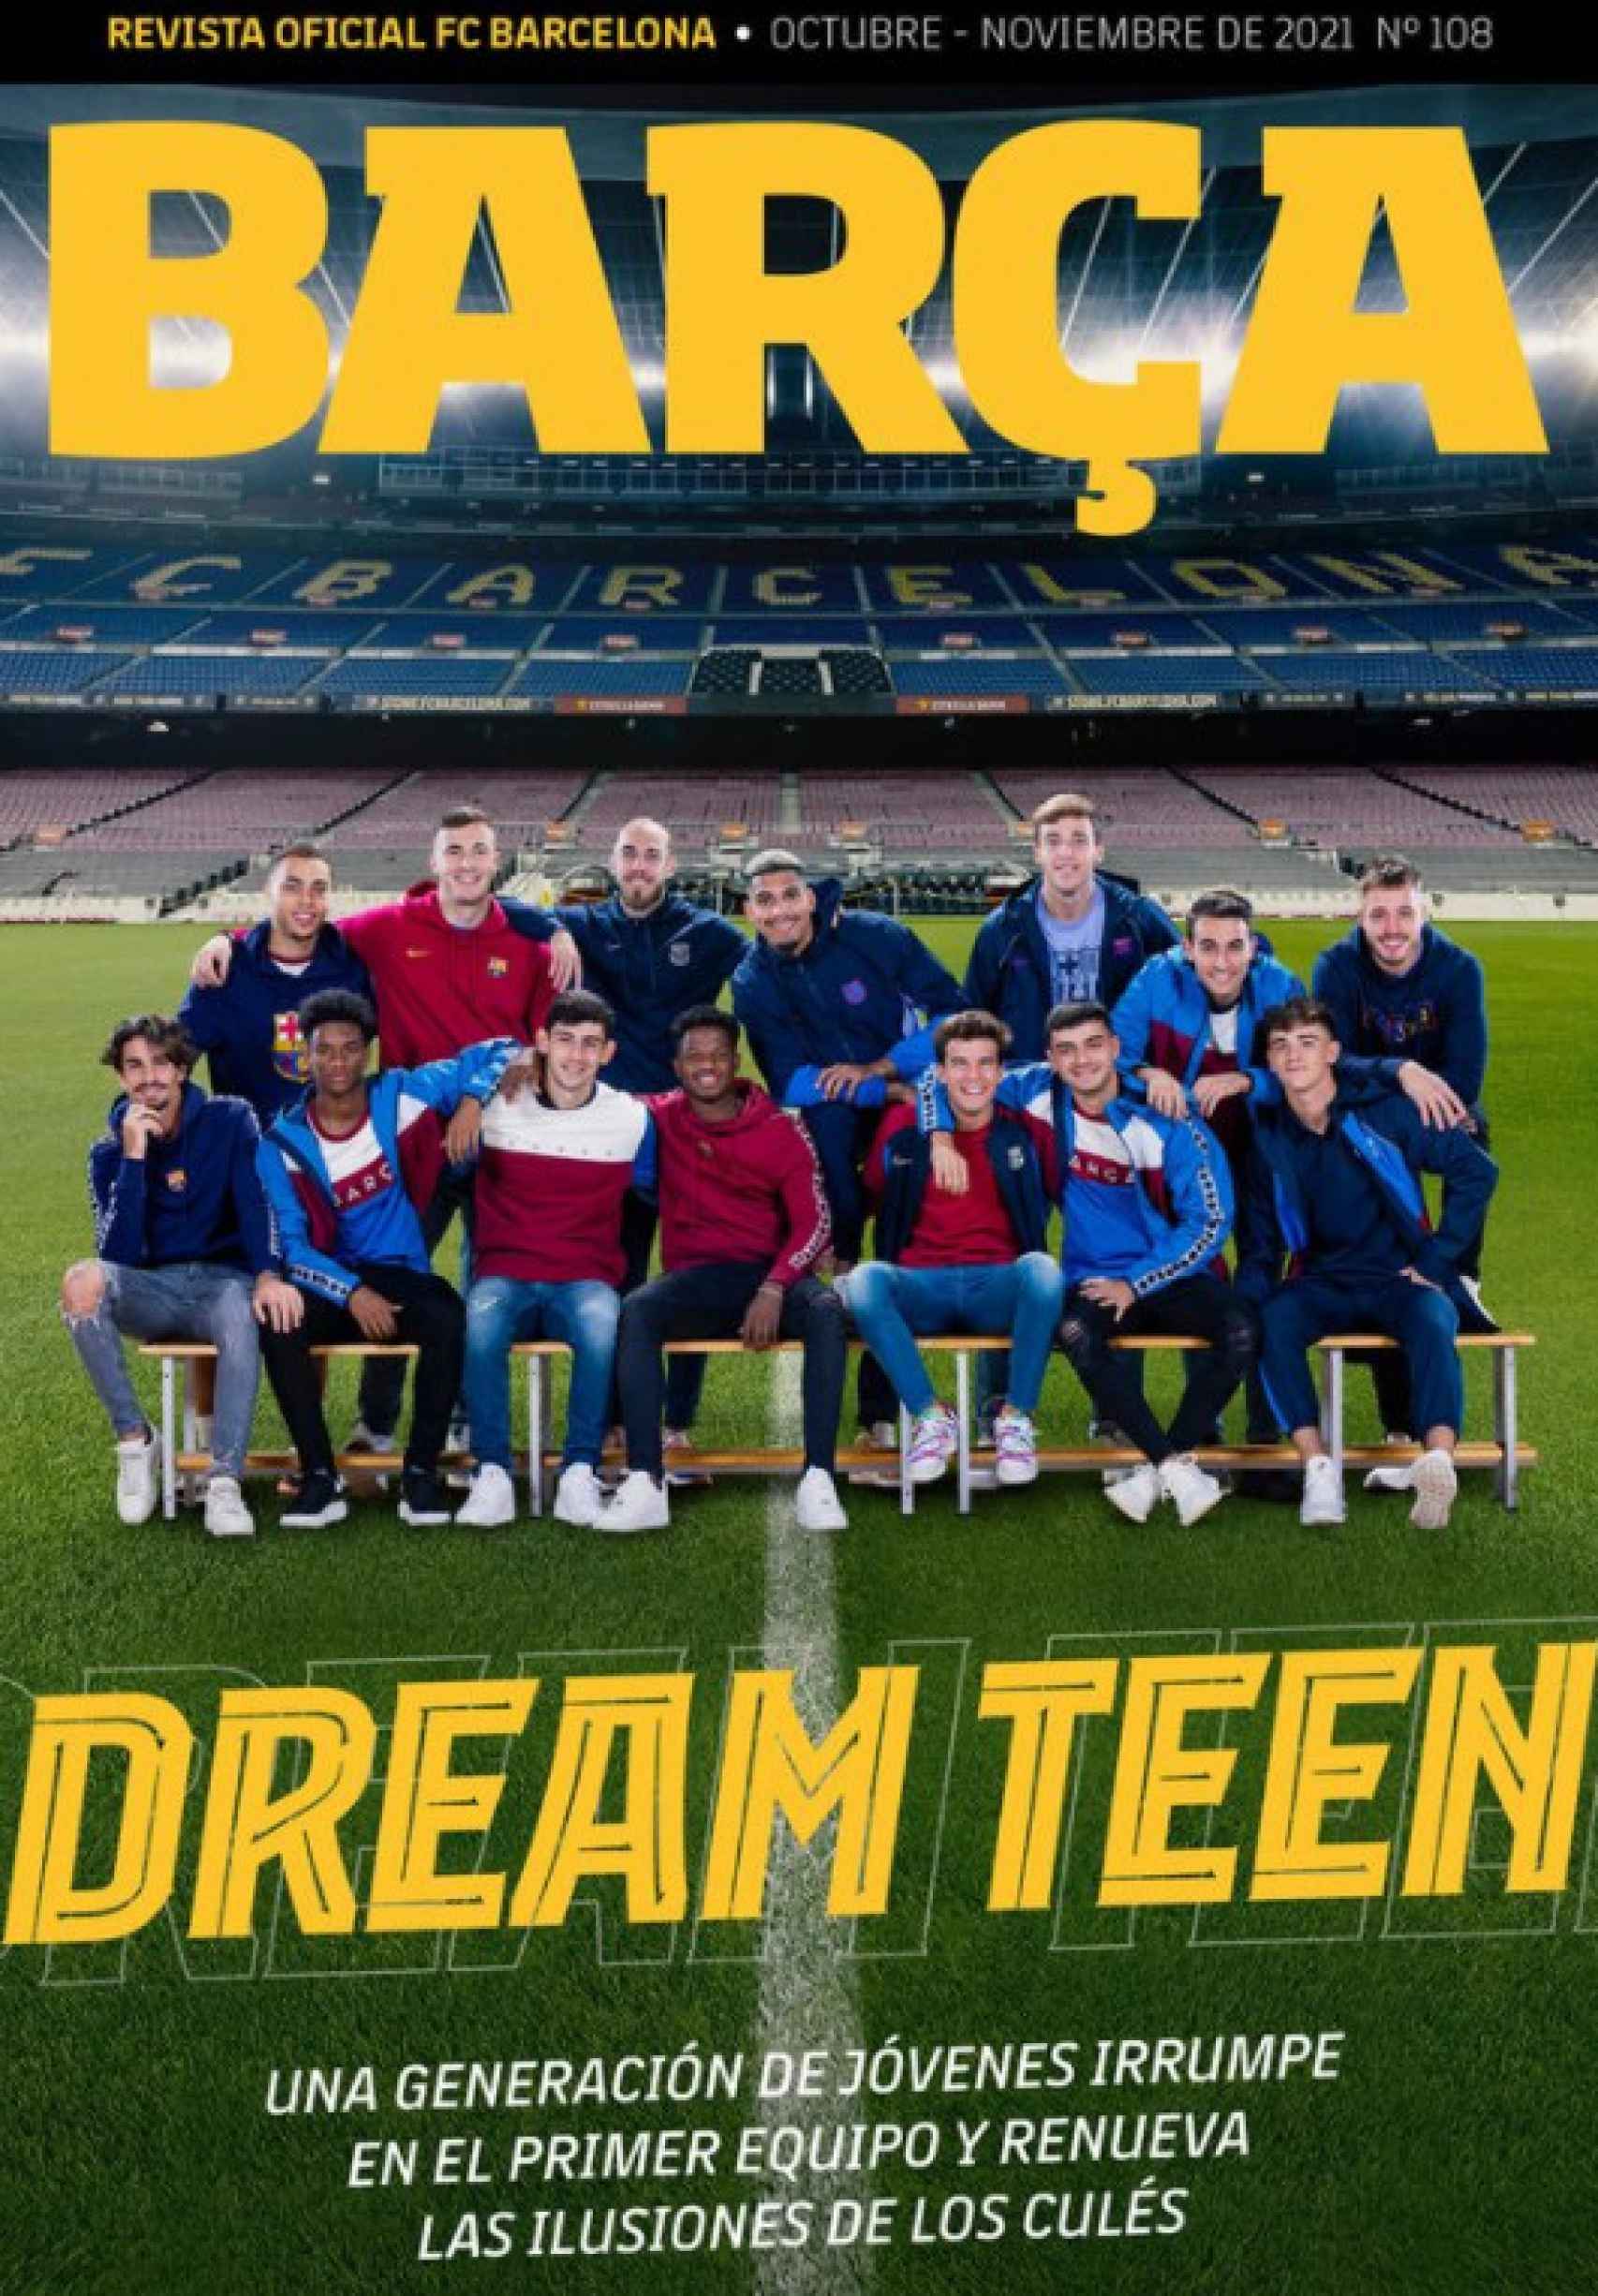 La portada del Barça haciendo gala del 'Dream Teen' de la temporada 2021-22